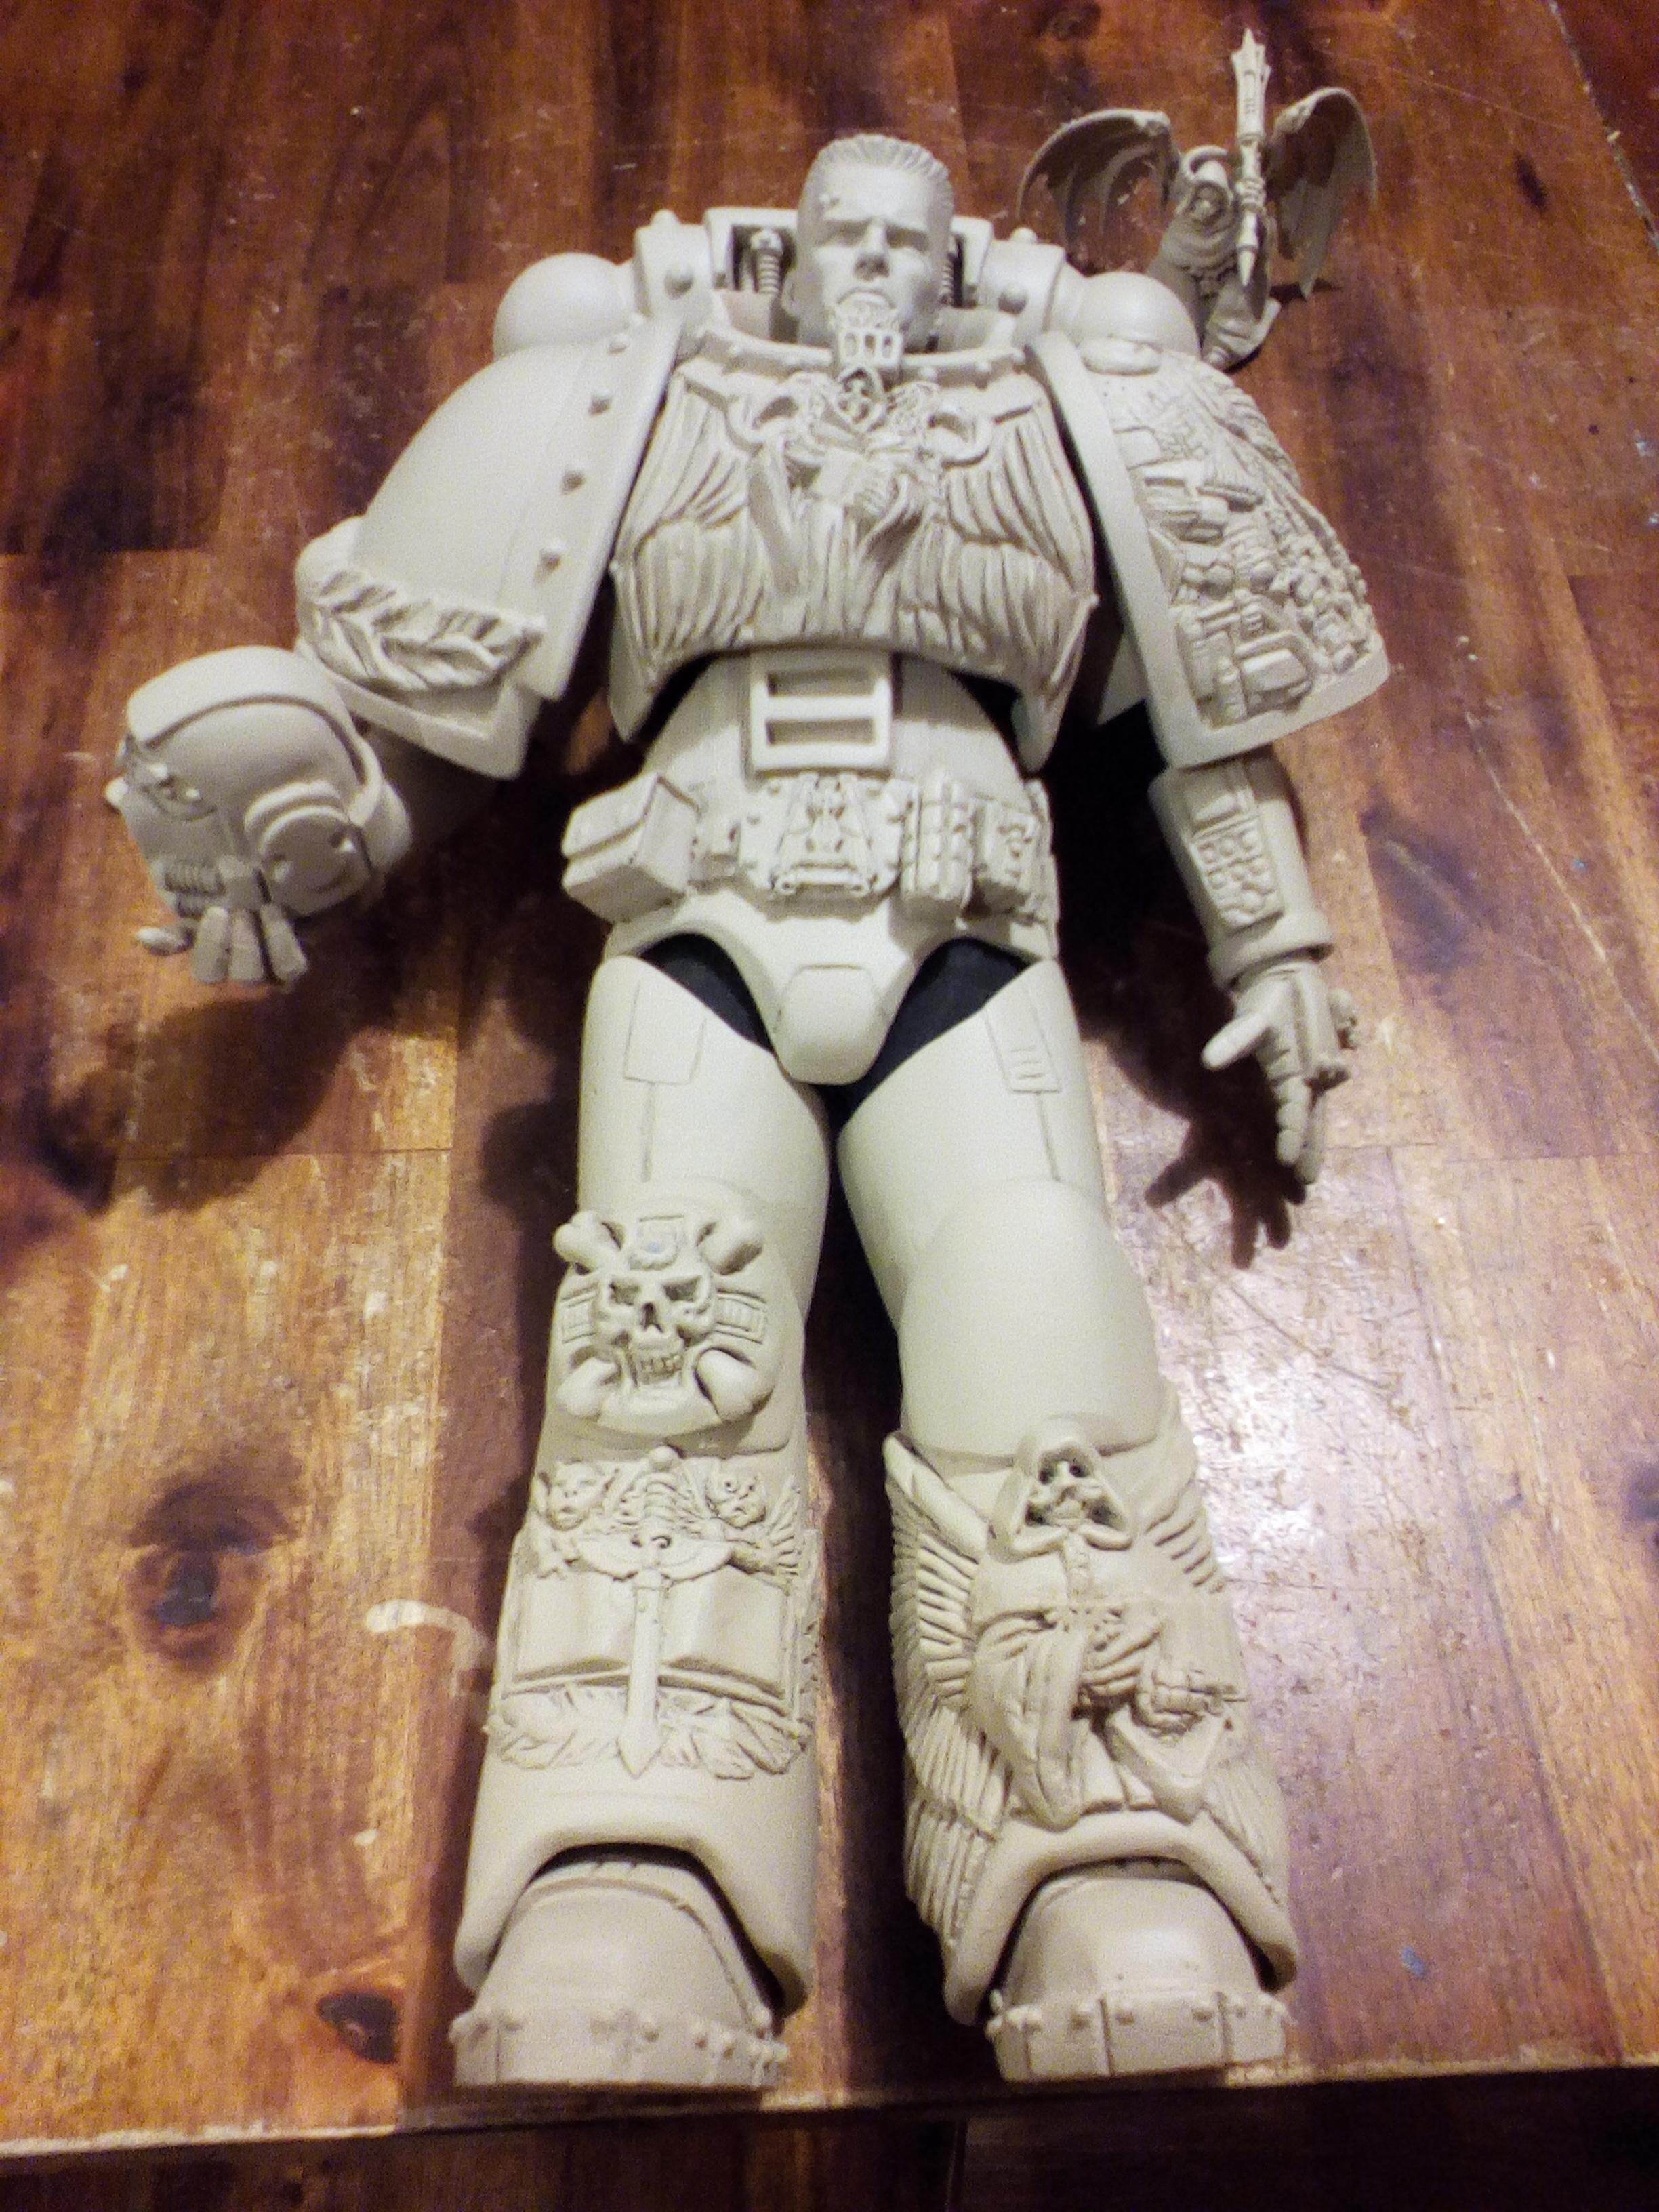 1/6, Action Figure, Big, Large, Scratch Build, Sculpting, Space Marines